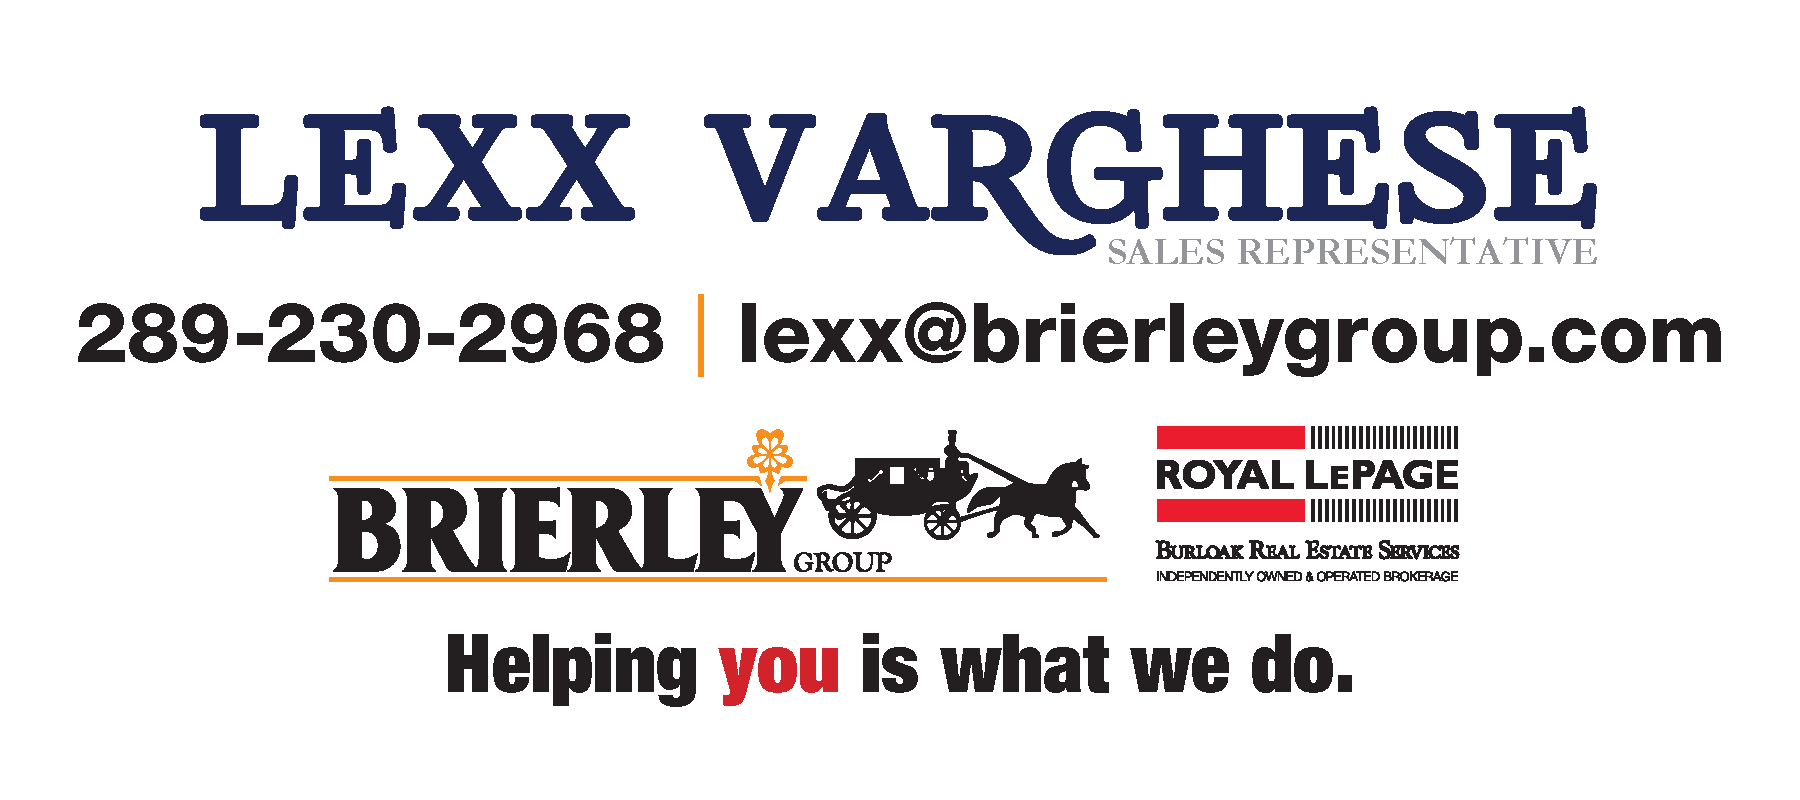 Lexx Varghese Sales Representative